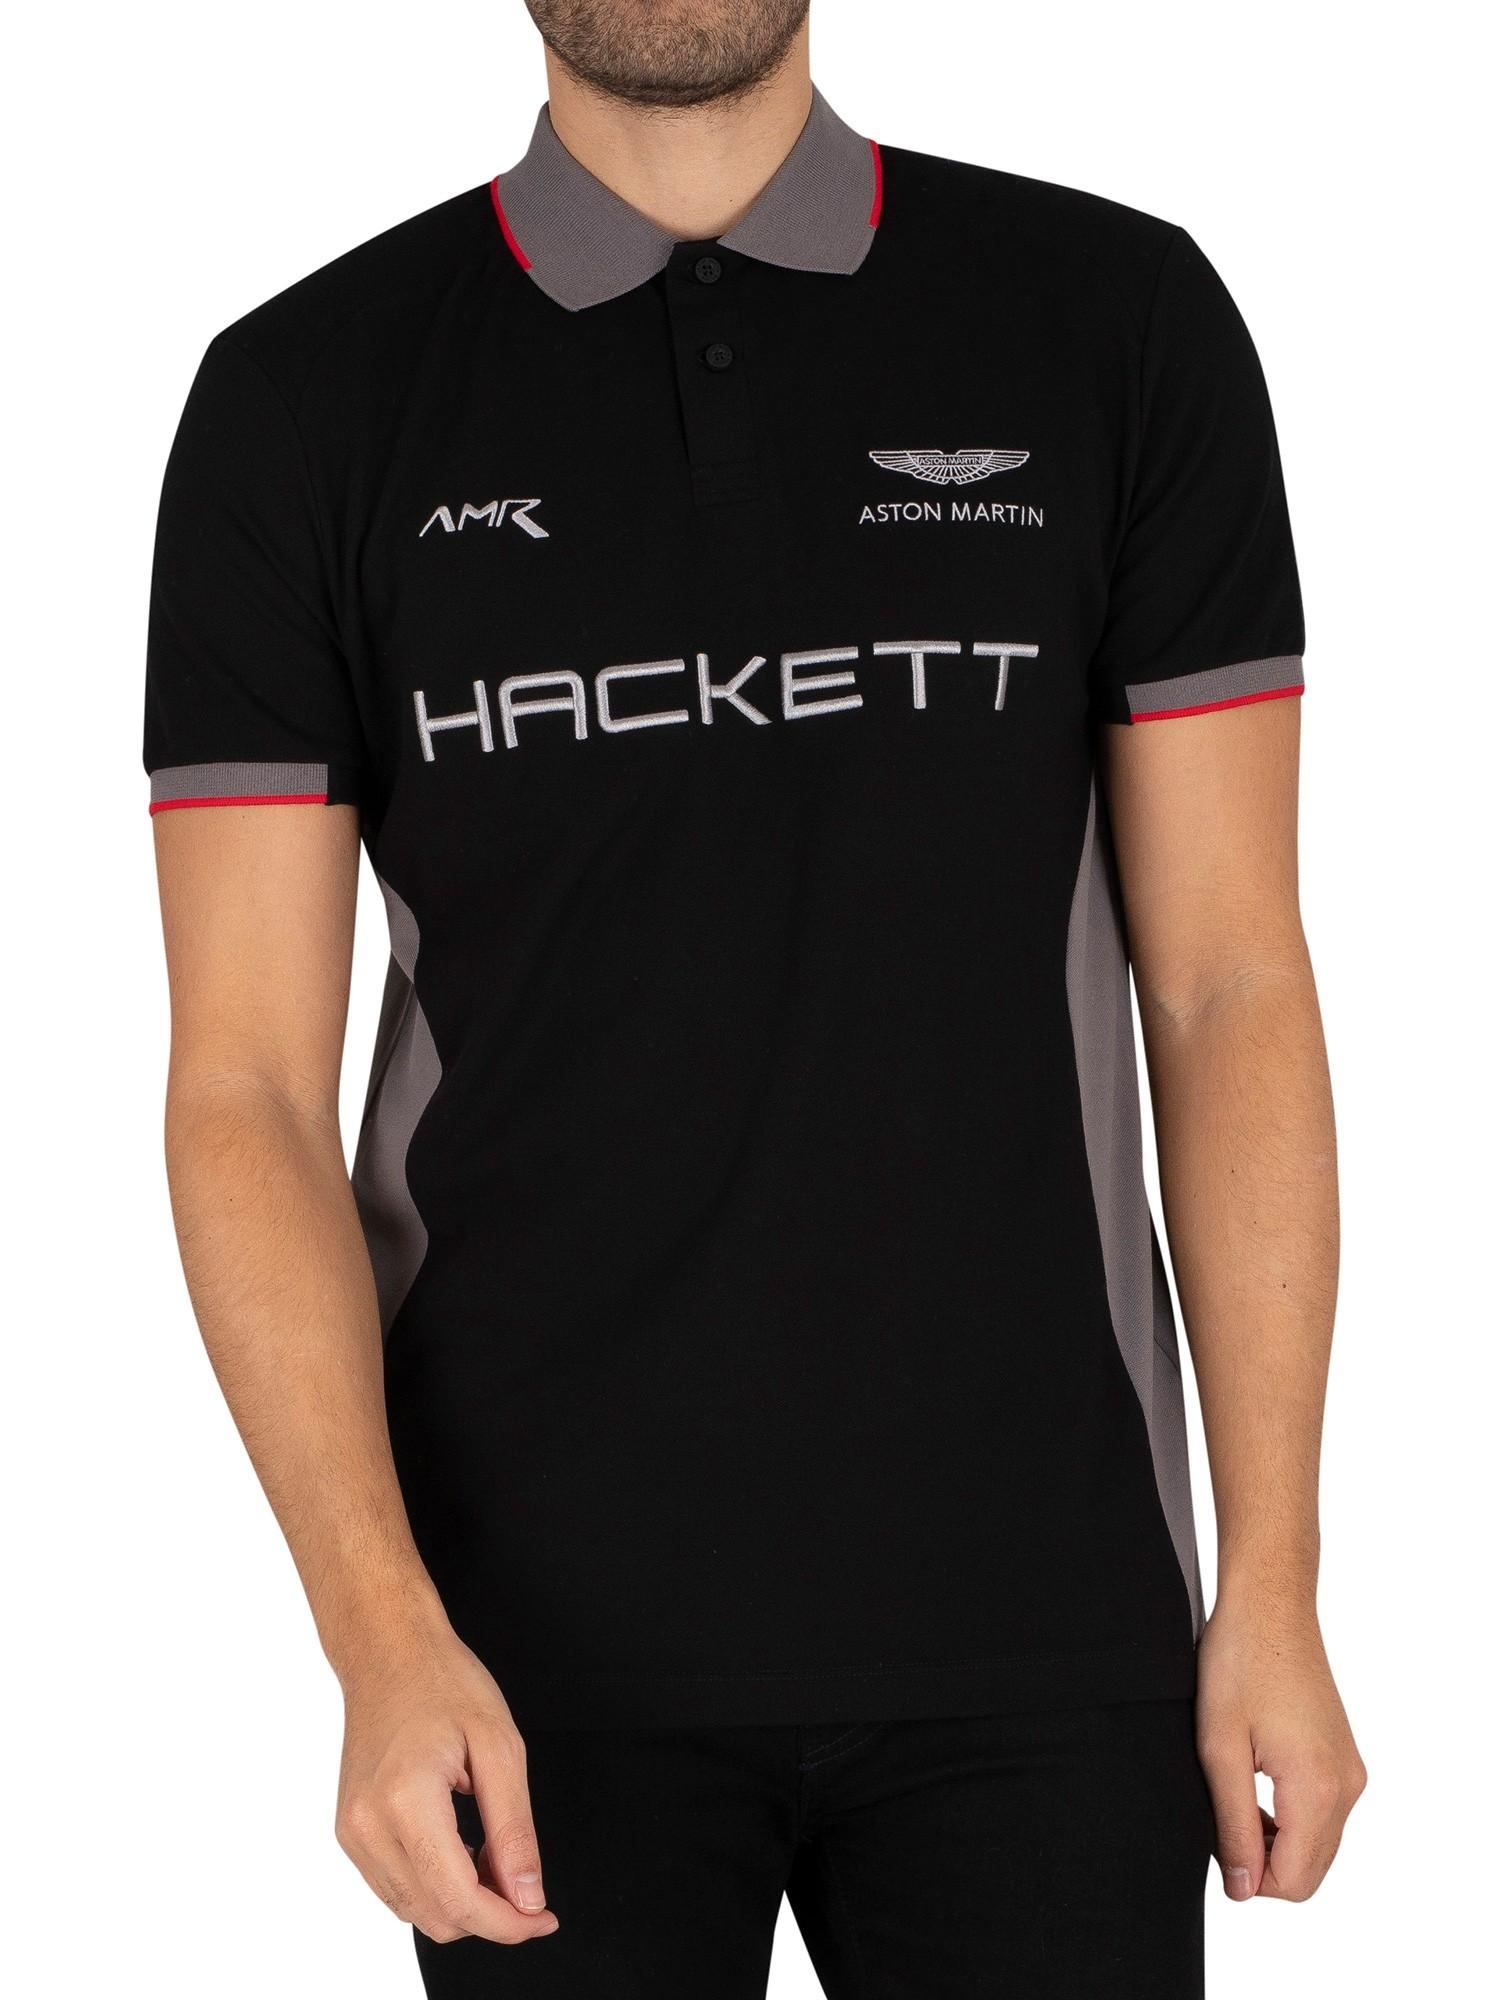 Hackett AMR Pro Hybrid Sweatshirt 